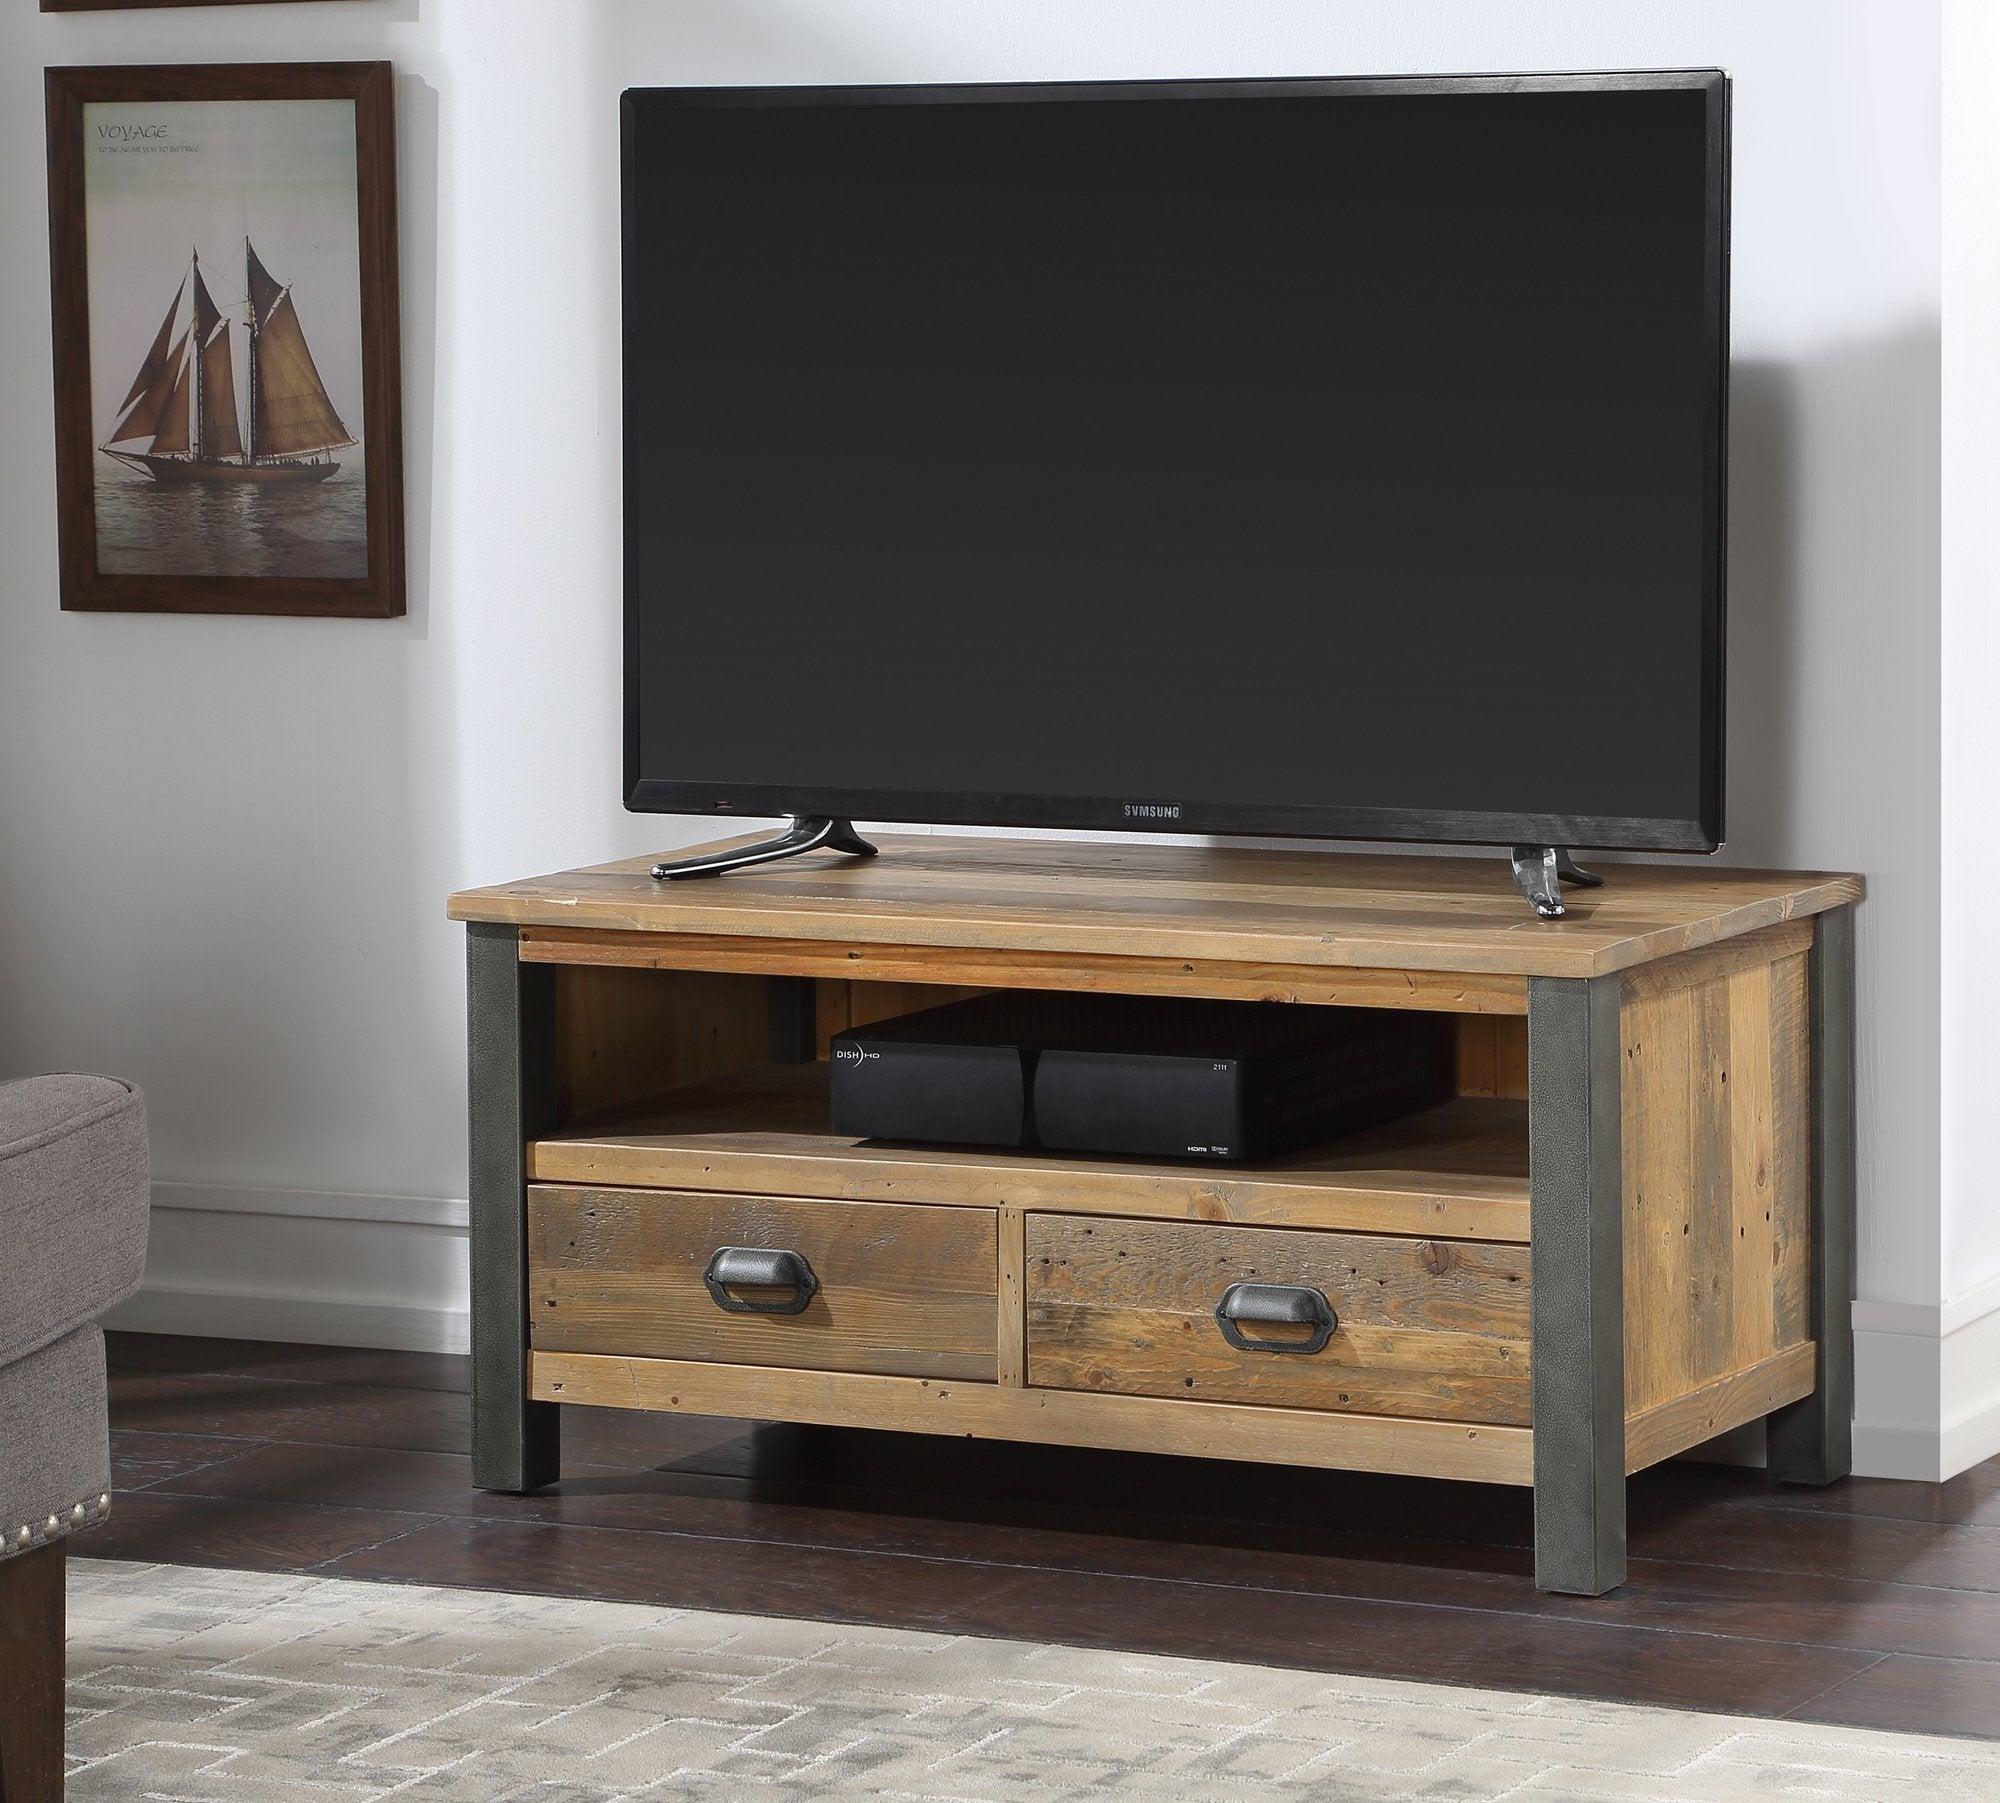 Urban elegance - reclaimed widescreen tv cabinet - crimblefest furniture - image 1